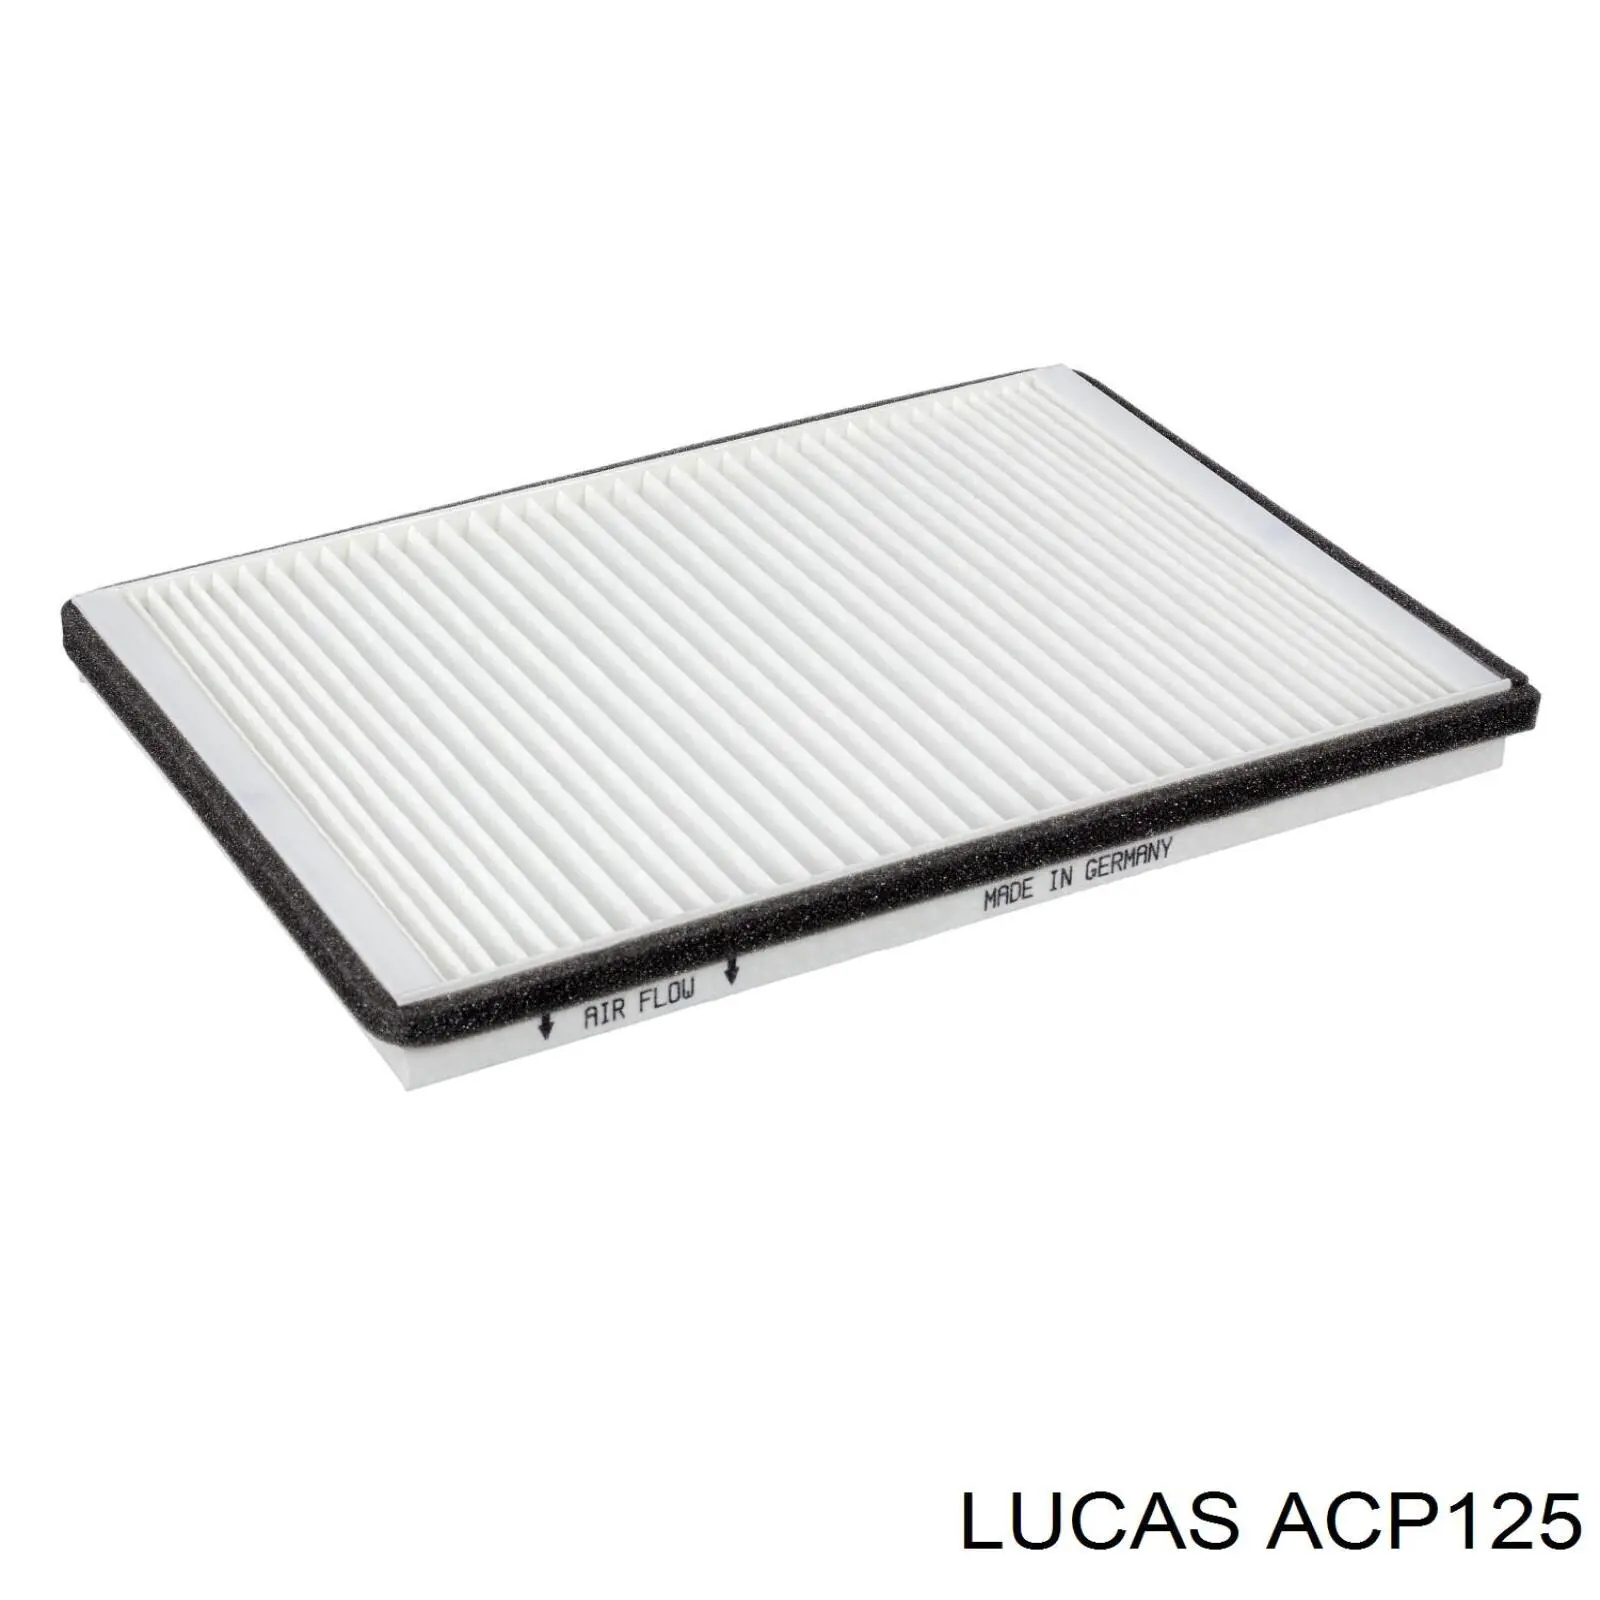 Compresor de aire acondicionado ACP125 Lucas